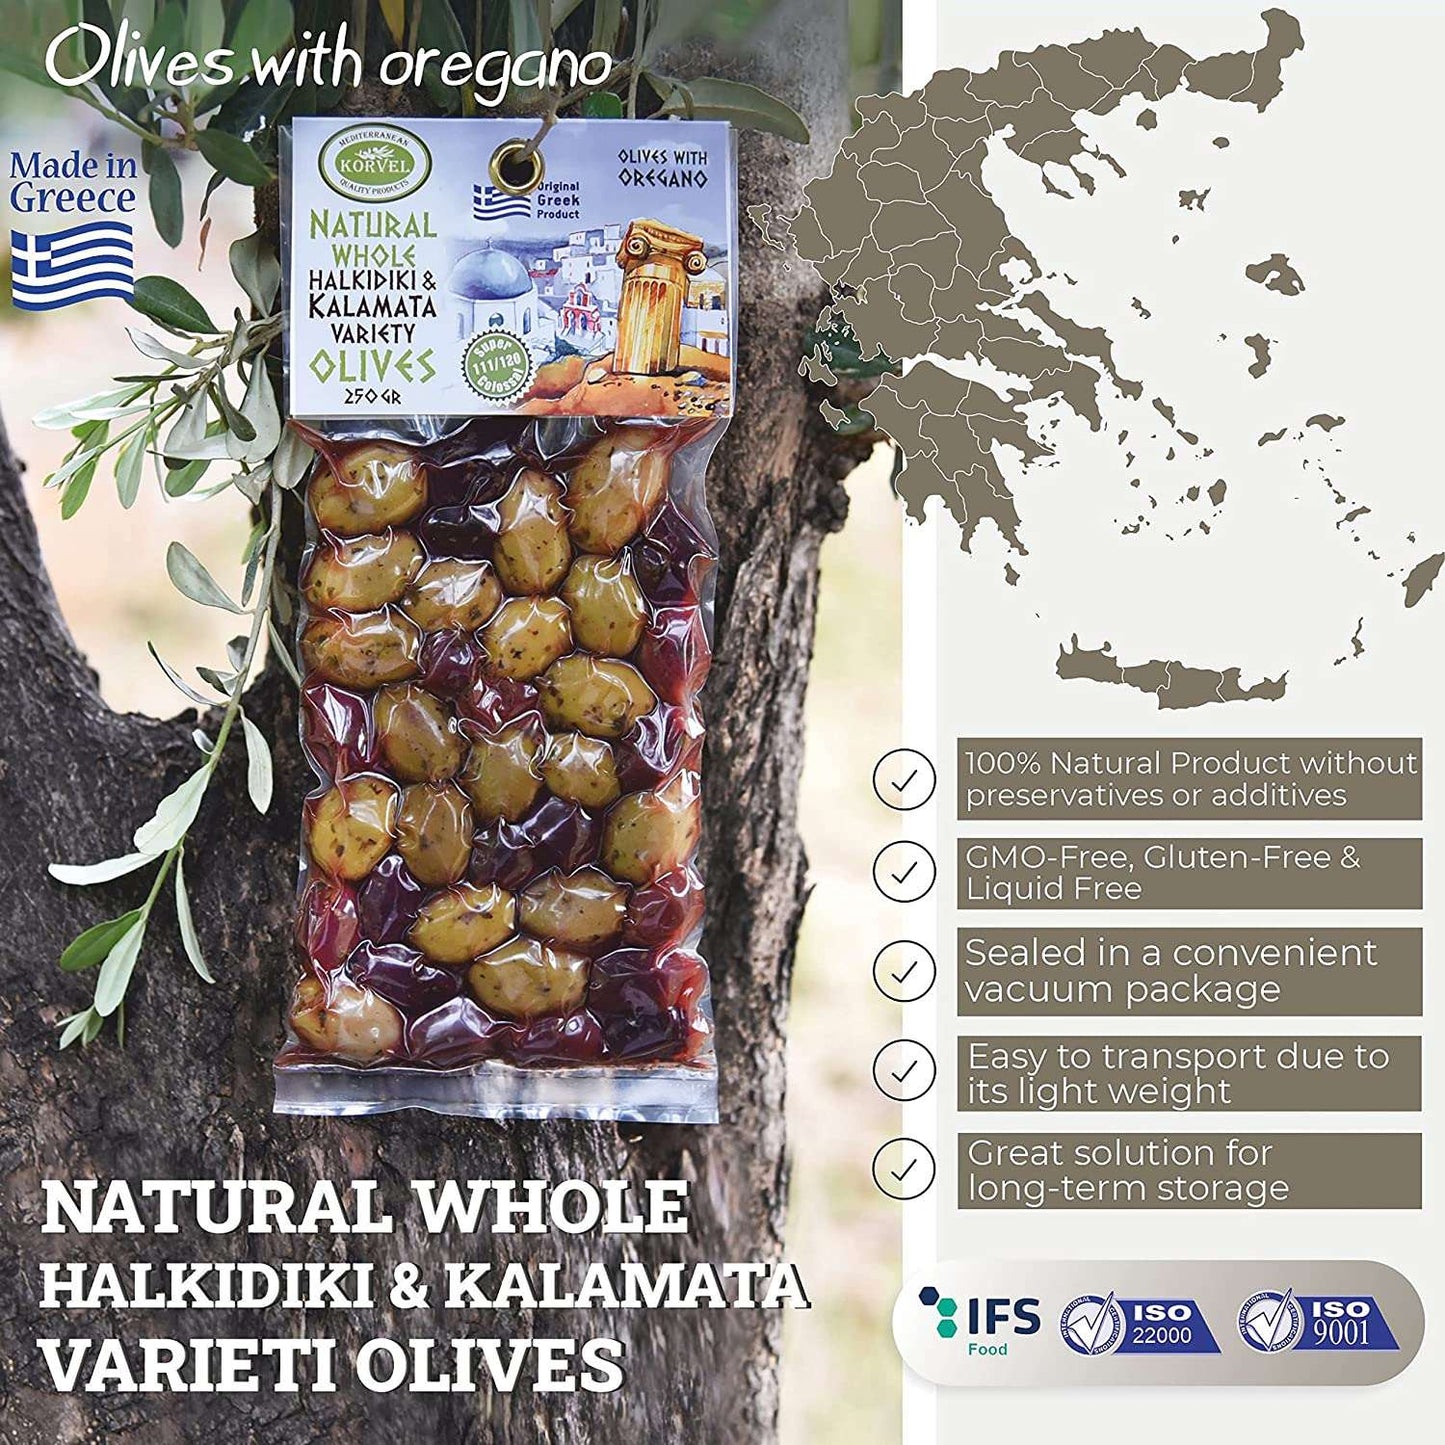 KORVEL Greek Olives - Kalamata-Halkidiki with Oregano - set of two packs 2 x 0.55 lb - 1.1 lb